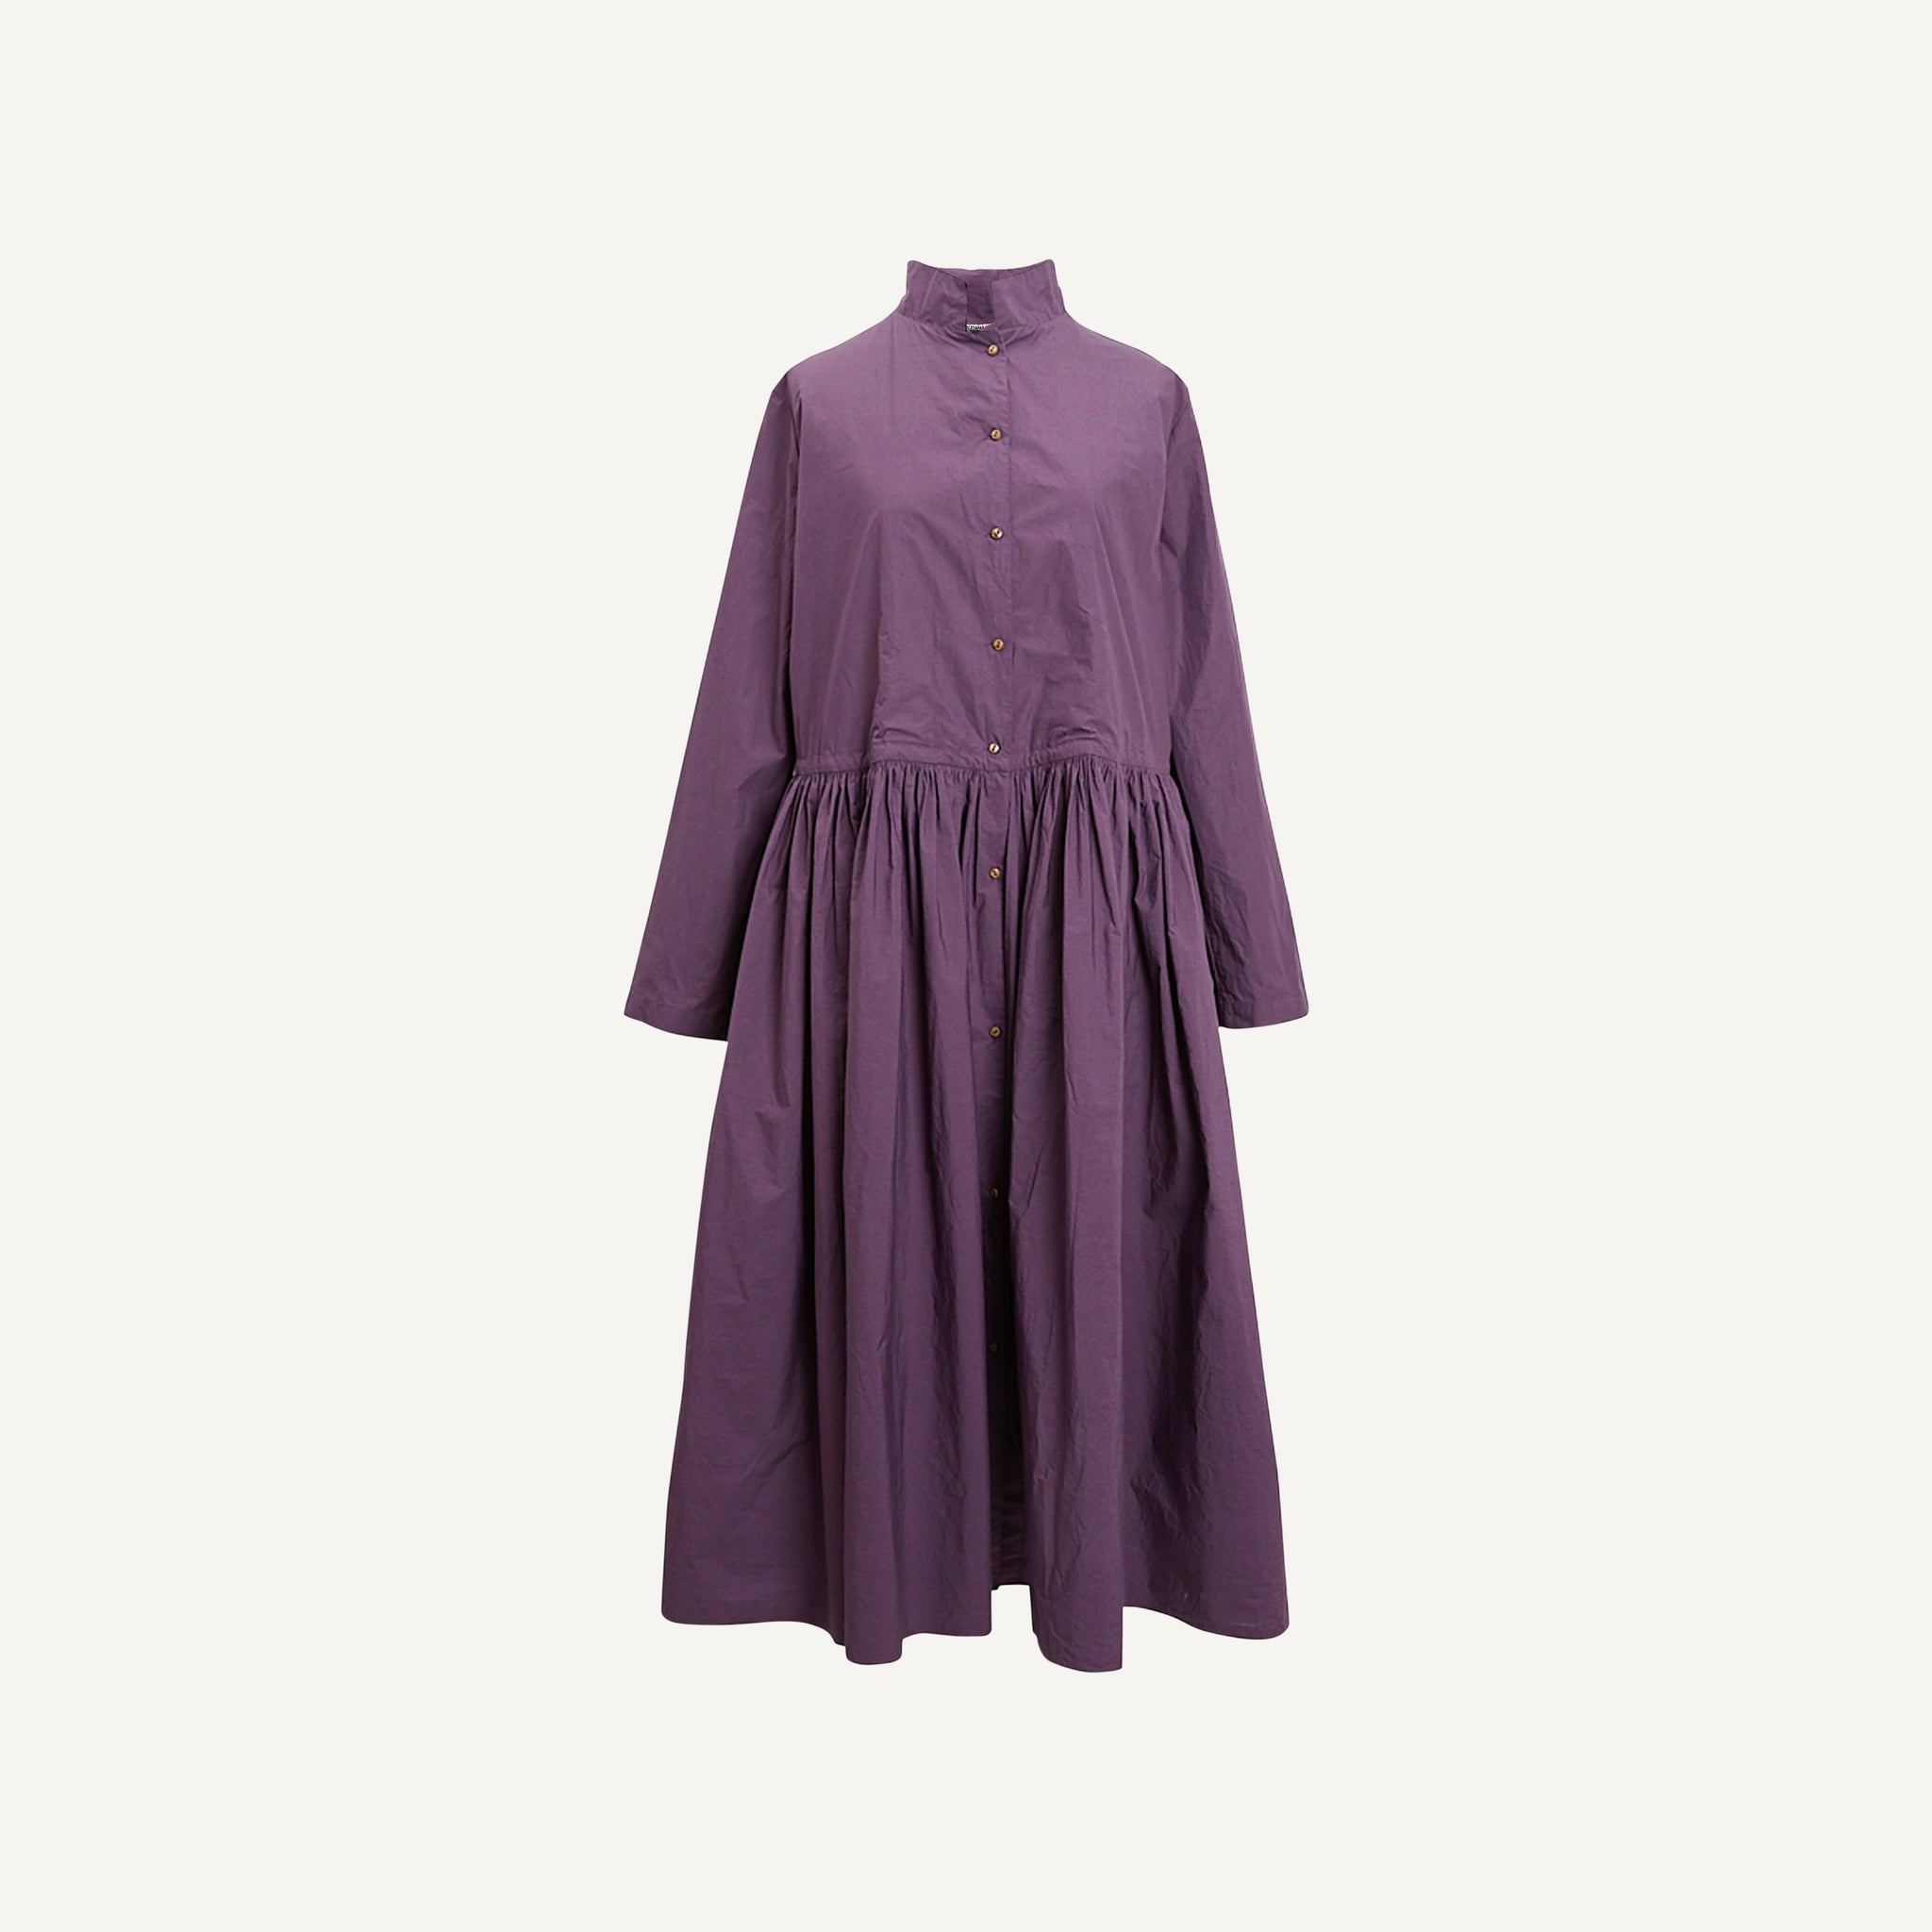 KAVAL STAND COLLAR DRESS